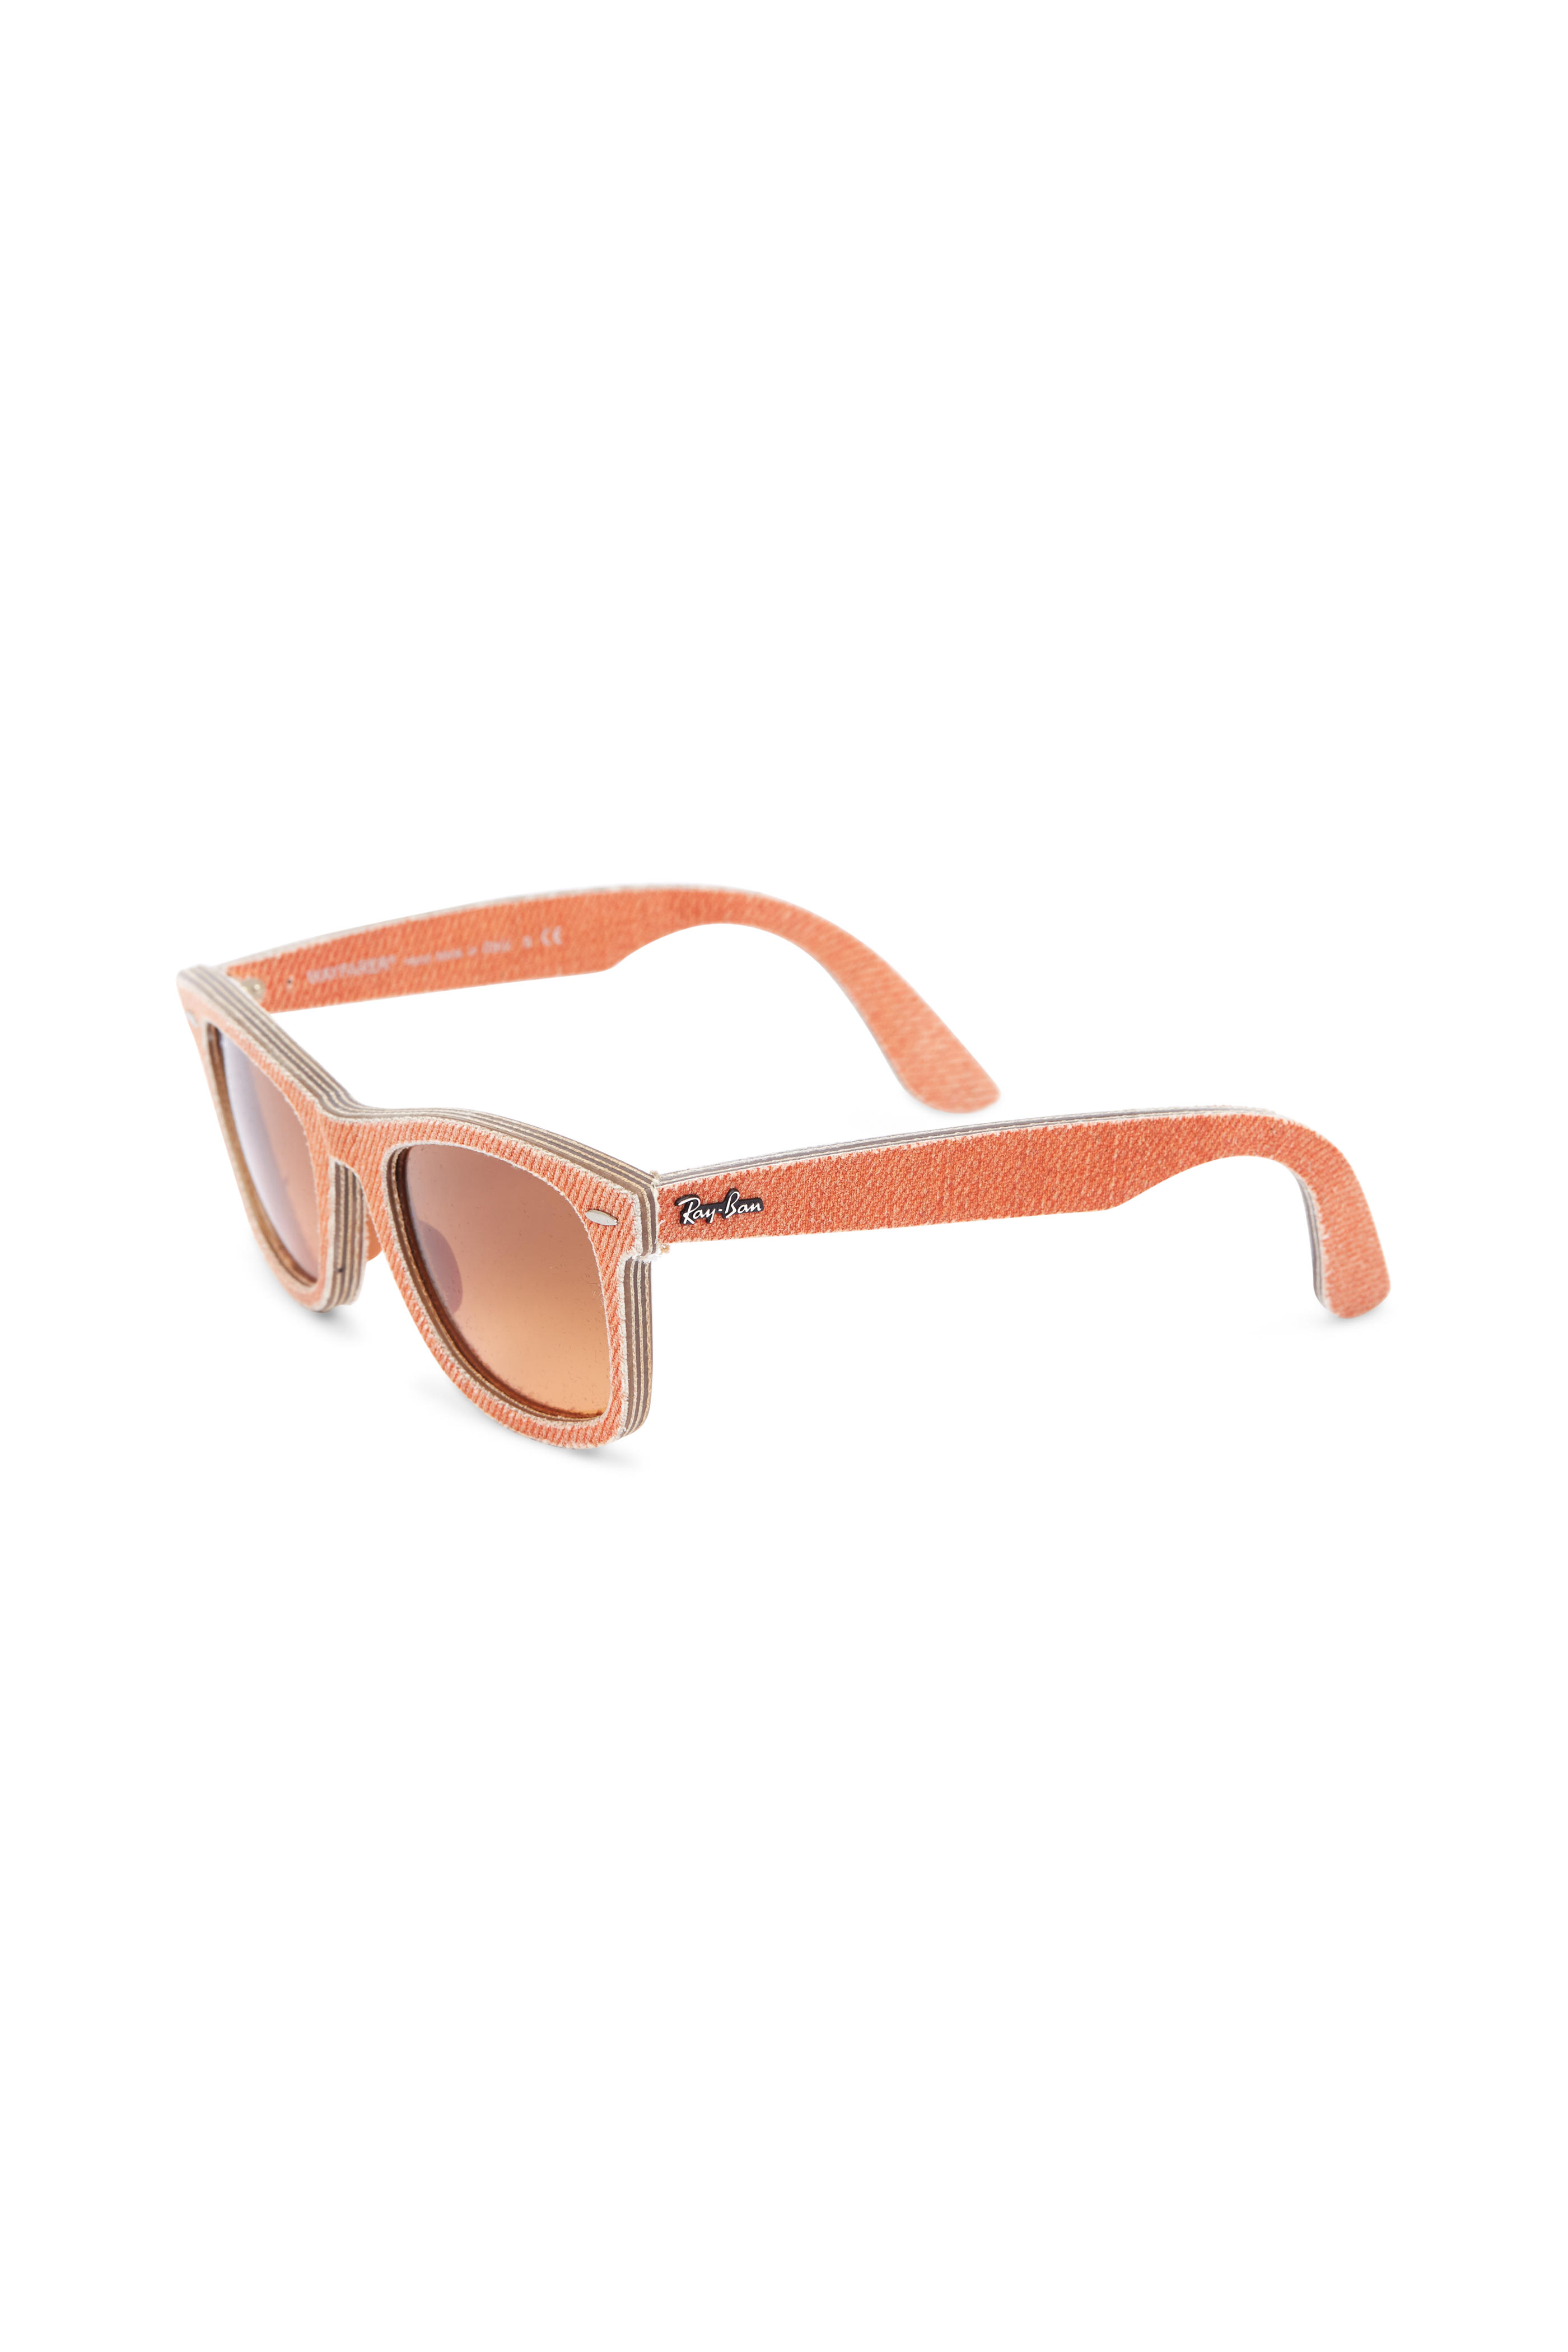 Ray Ban - RB 2140 Original Wayfarer Orange Denim Sunglasses